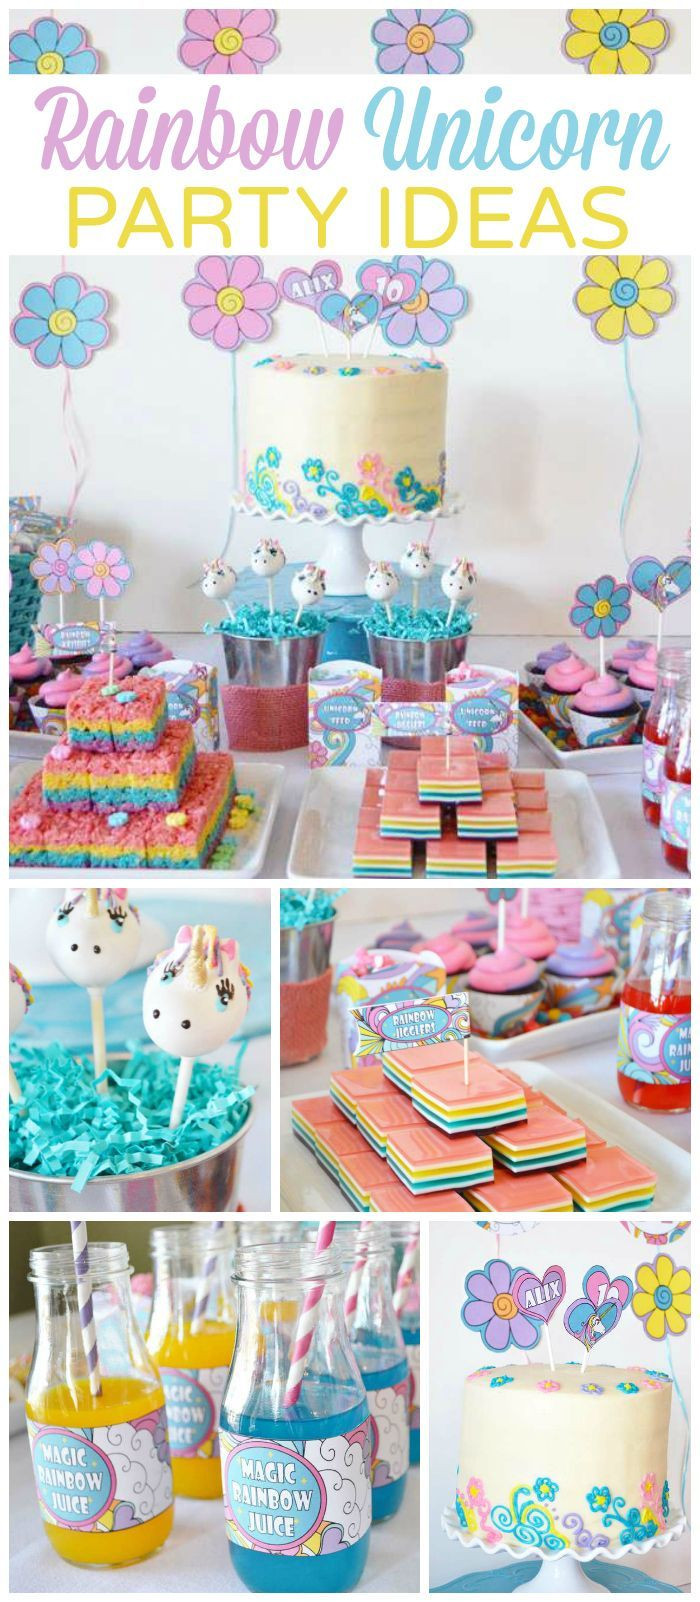 Ideas For A Unicorn Child'S Birthday Party
 25 best ideas about Rainbow unicorn on Pinterest